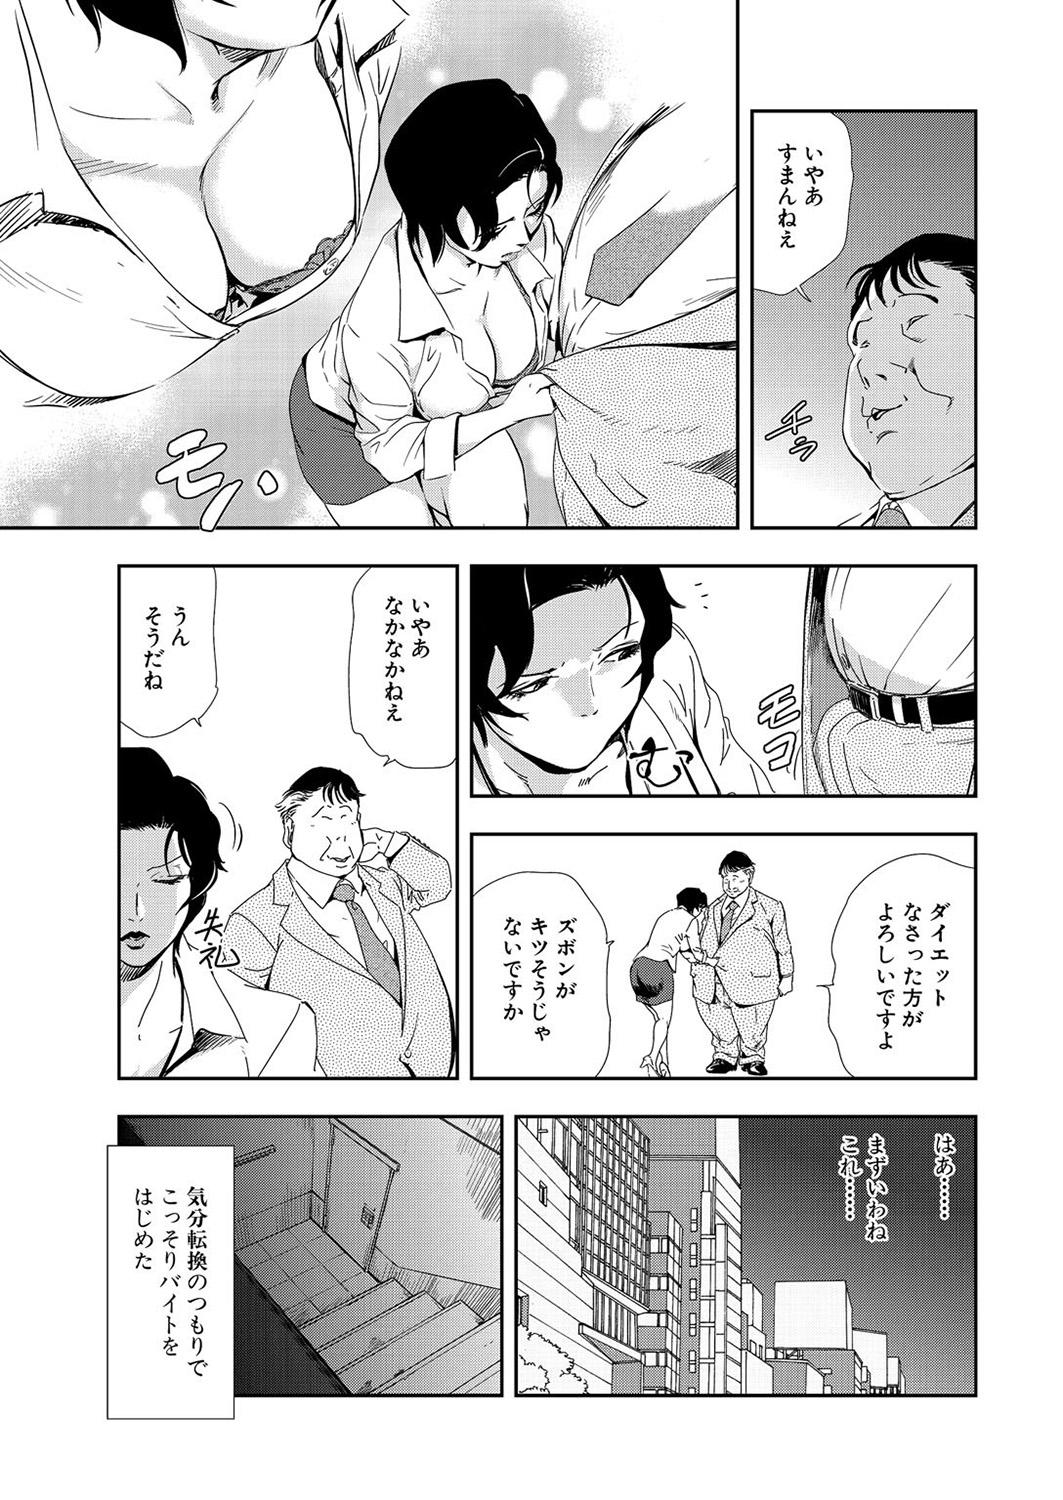 Blowing Nikuhisyo Yukiko 9 For - Page 11